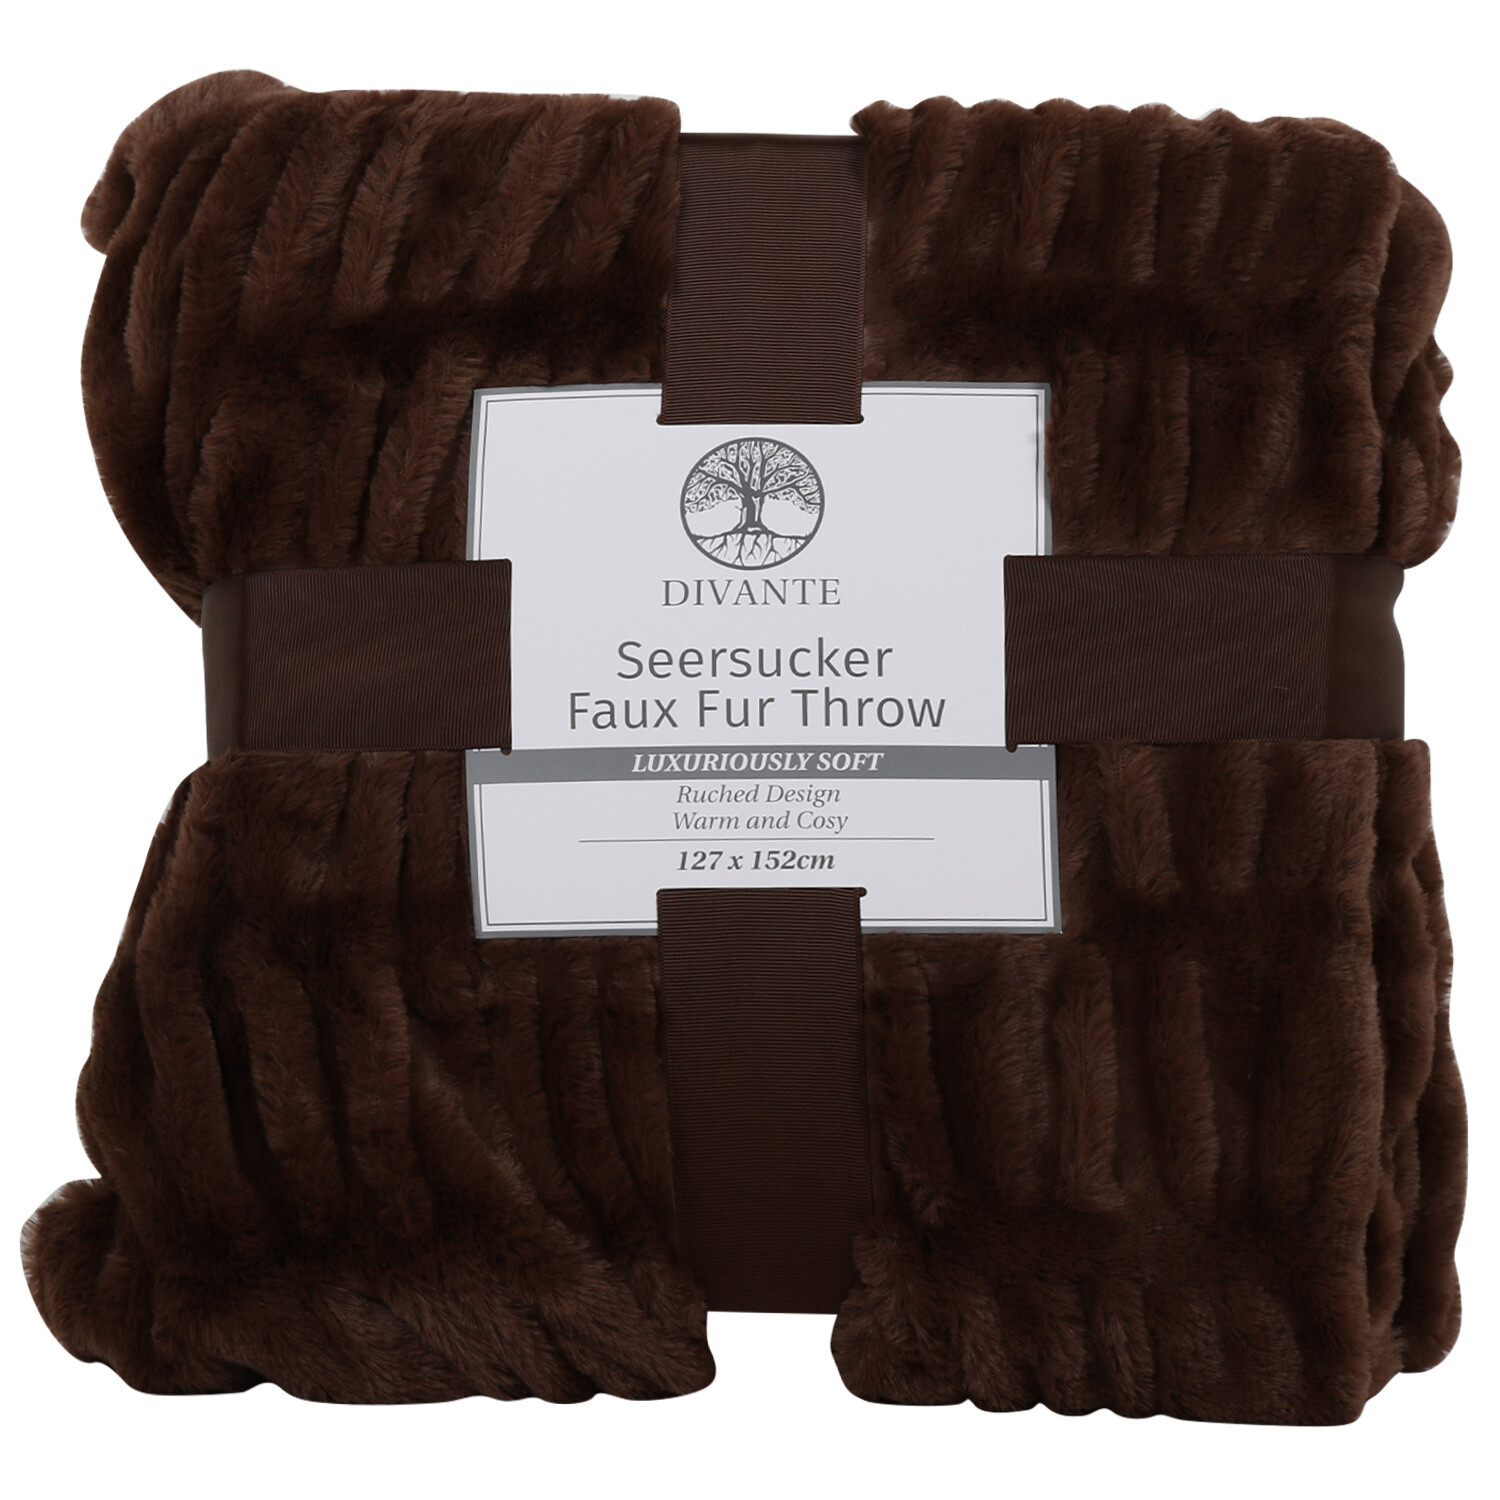 Divante Seersucker Chocolate Faux Fur Throw 1127 x 152cm Image 1